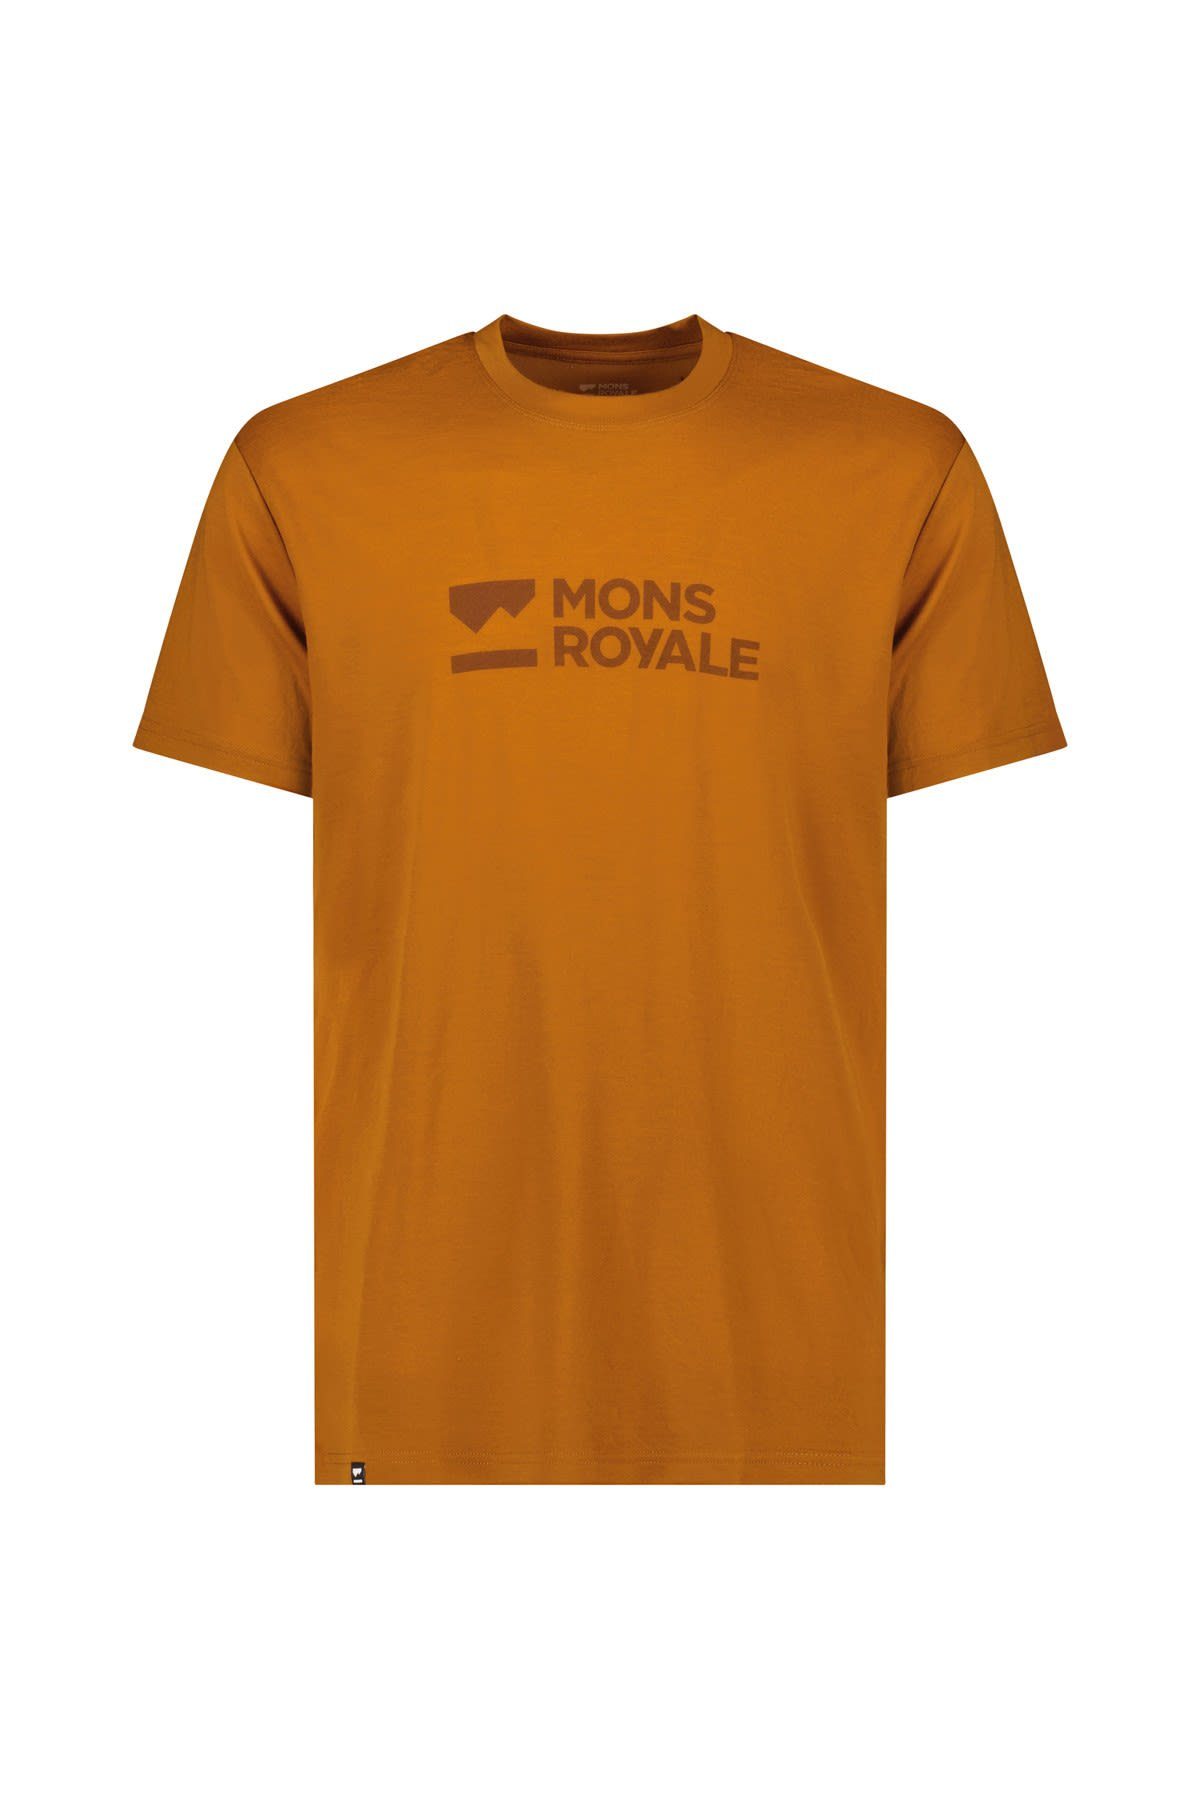 Royale - Mons T-shirt Herren Kurzarm-Shirt T-Shirt Logo M Mons Royale Icon Mons Copper